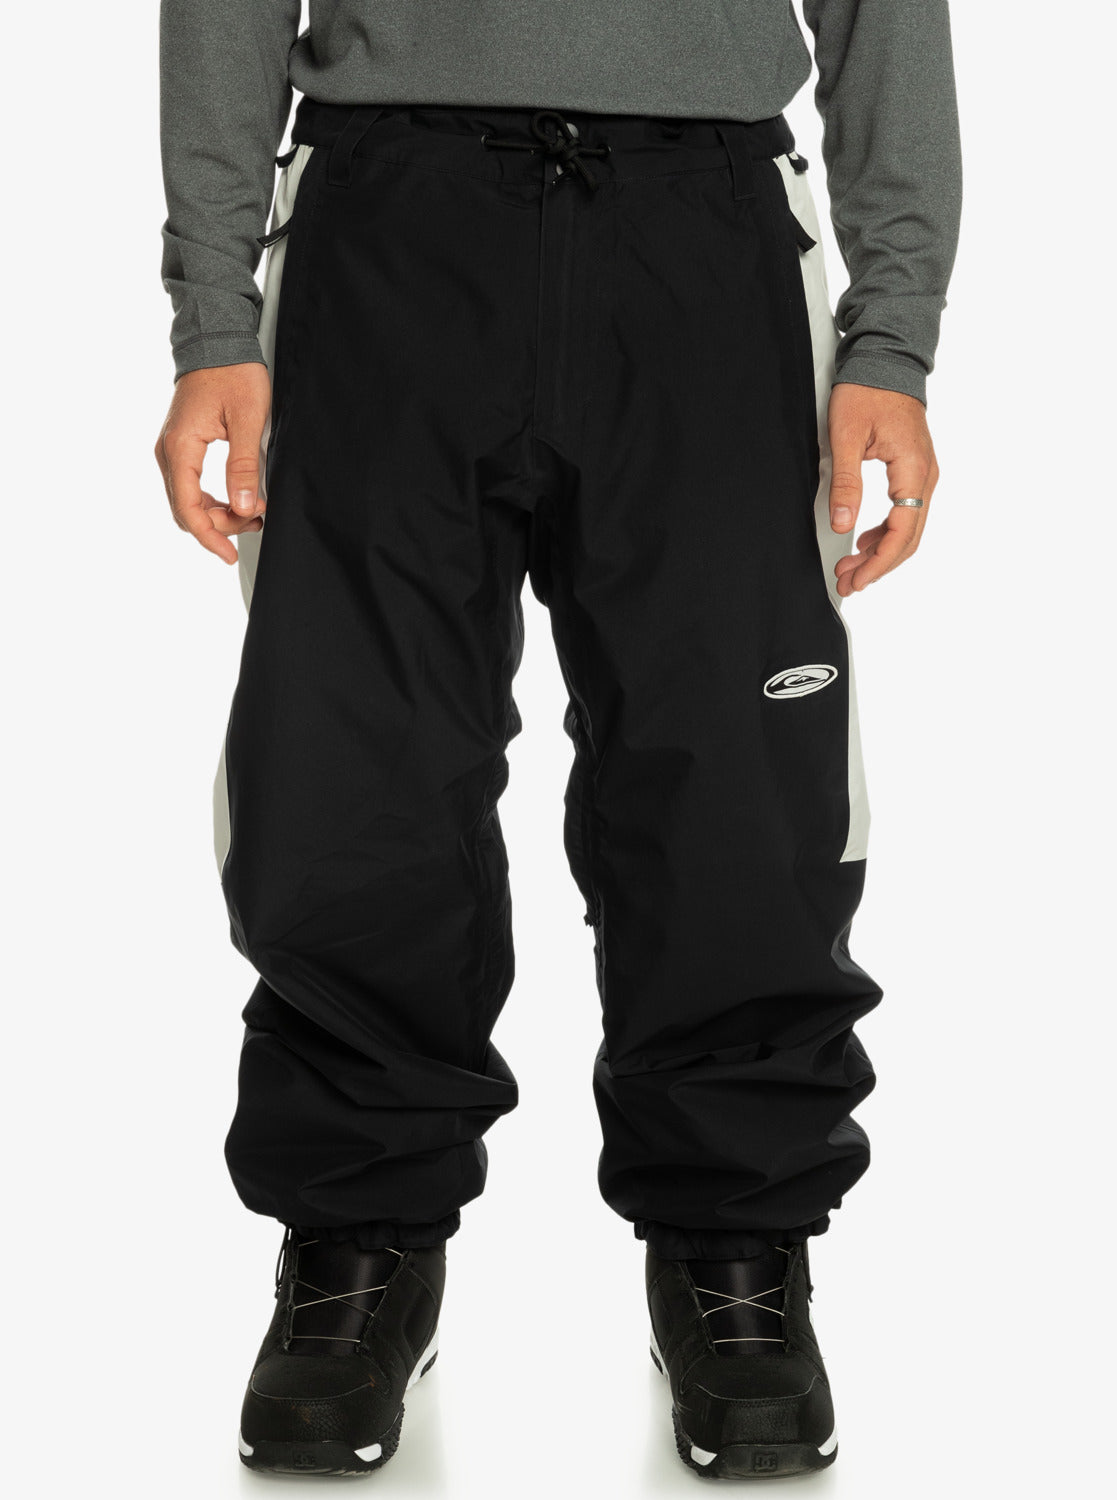 Mens High Altitude GORE-TEX Technical Snow Pants